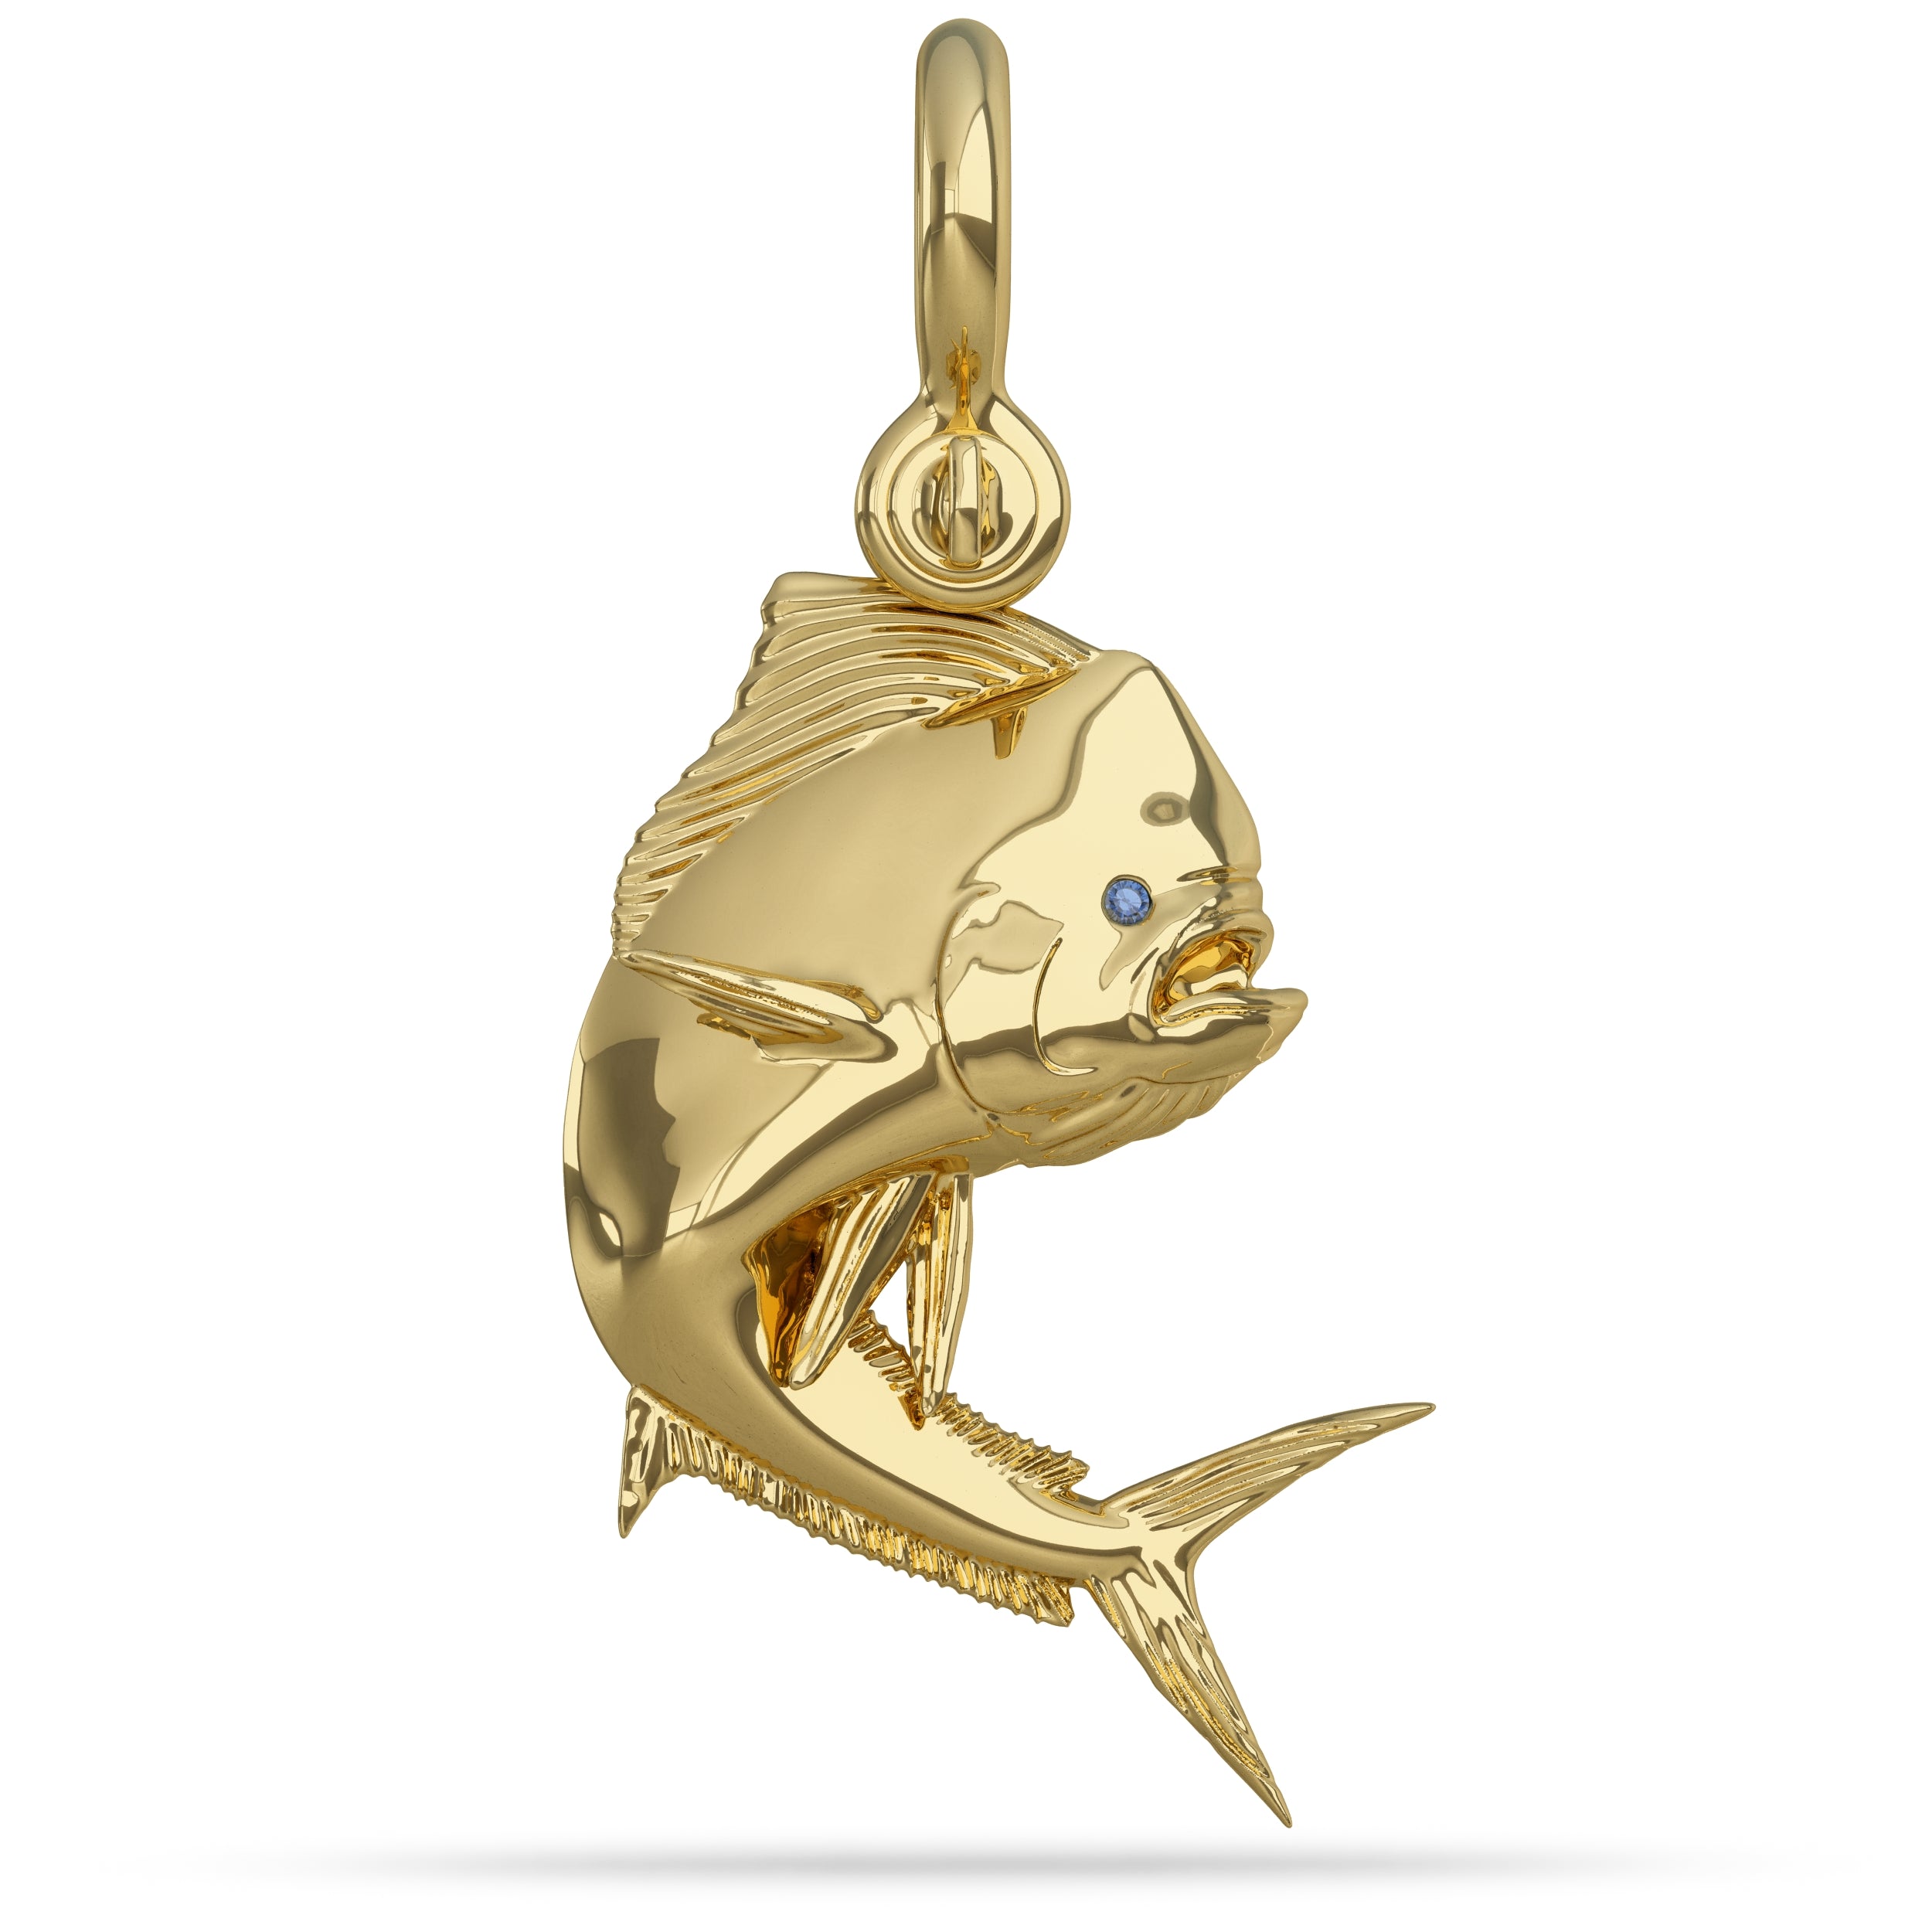 Solid 14k Gold Bull Mahi Mahi Pendant High Polished Mirror Finish With Blue Sapphire Eye with A Mariner Shackle Bail Custom Designed By Nautical Treasure Jewelry In The Florida Keys 